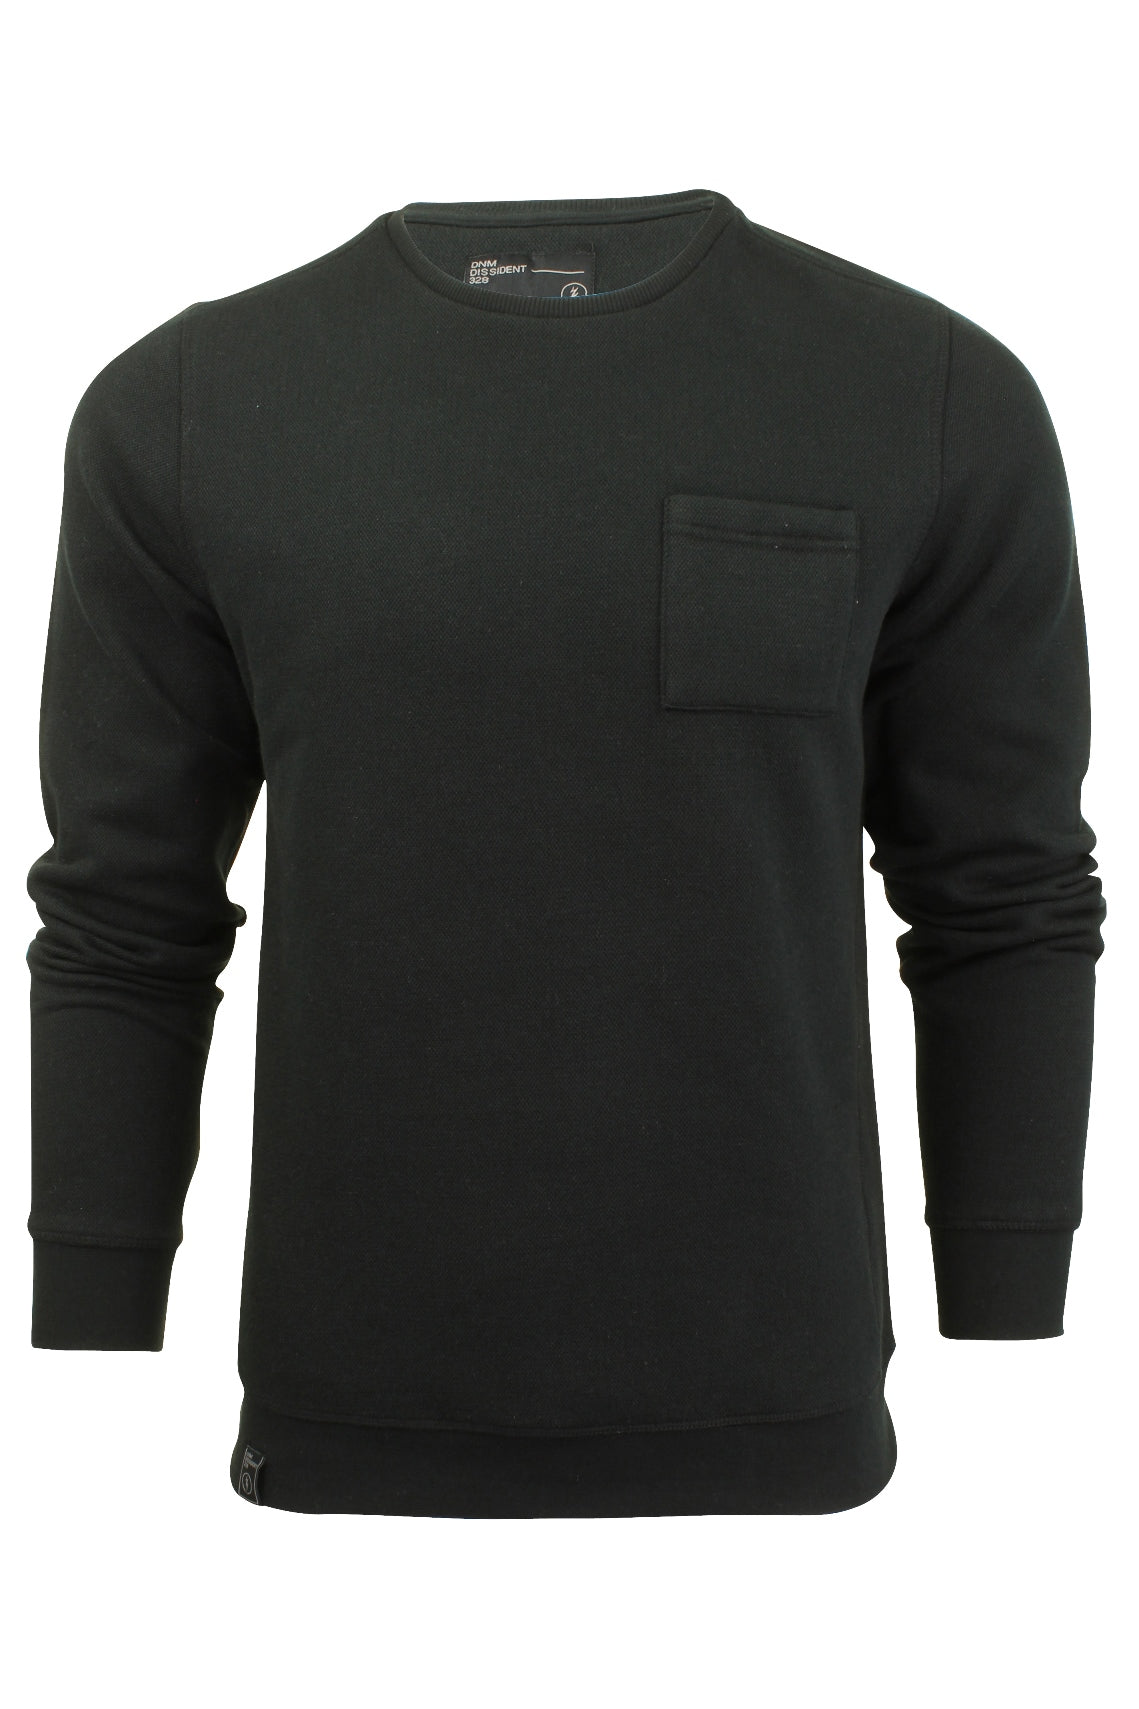 Mens Jumper Cotton Mix Fashion Sweater Jumper by Dissident (Black, L), 01, 1D8189, Black